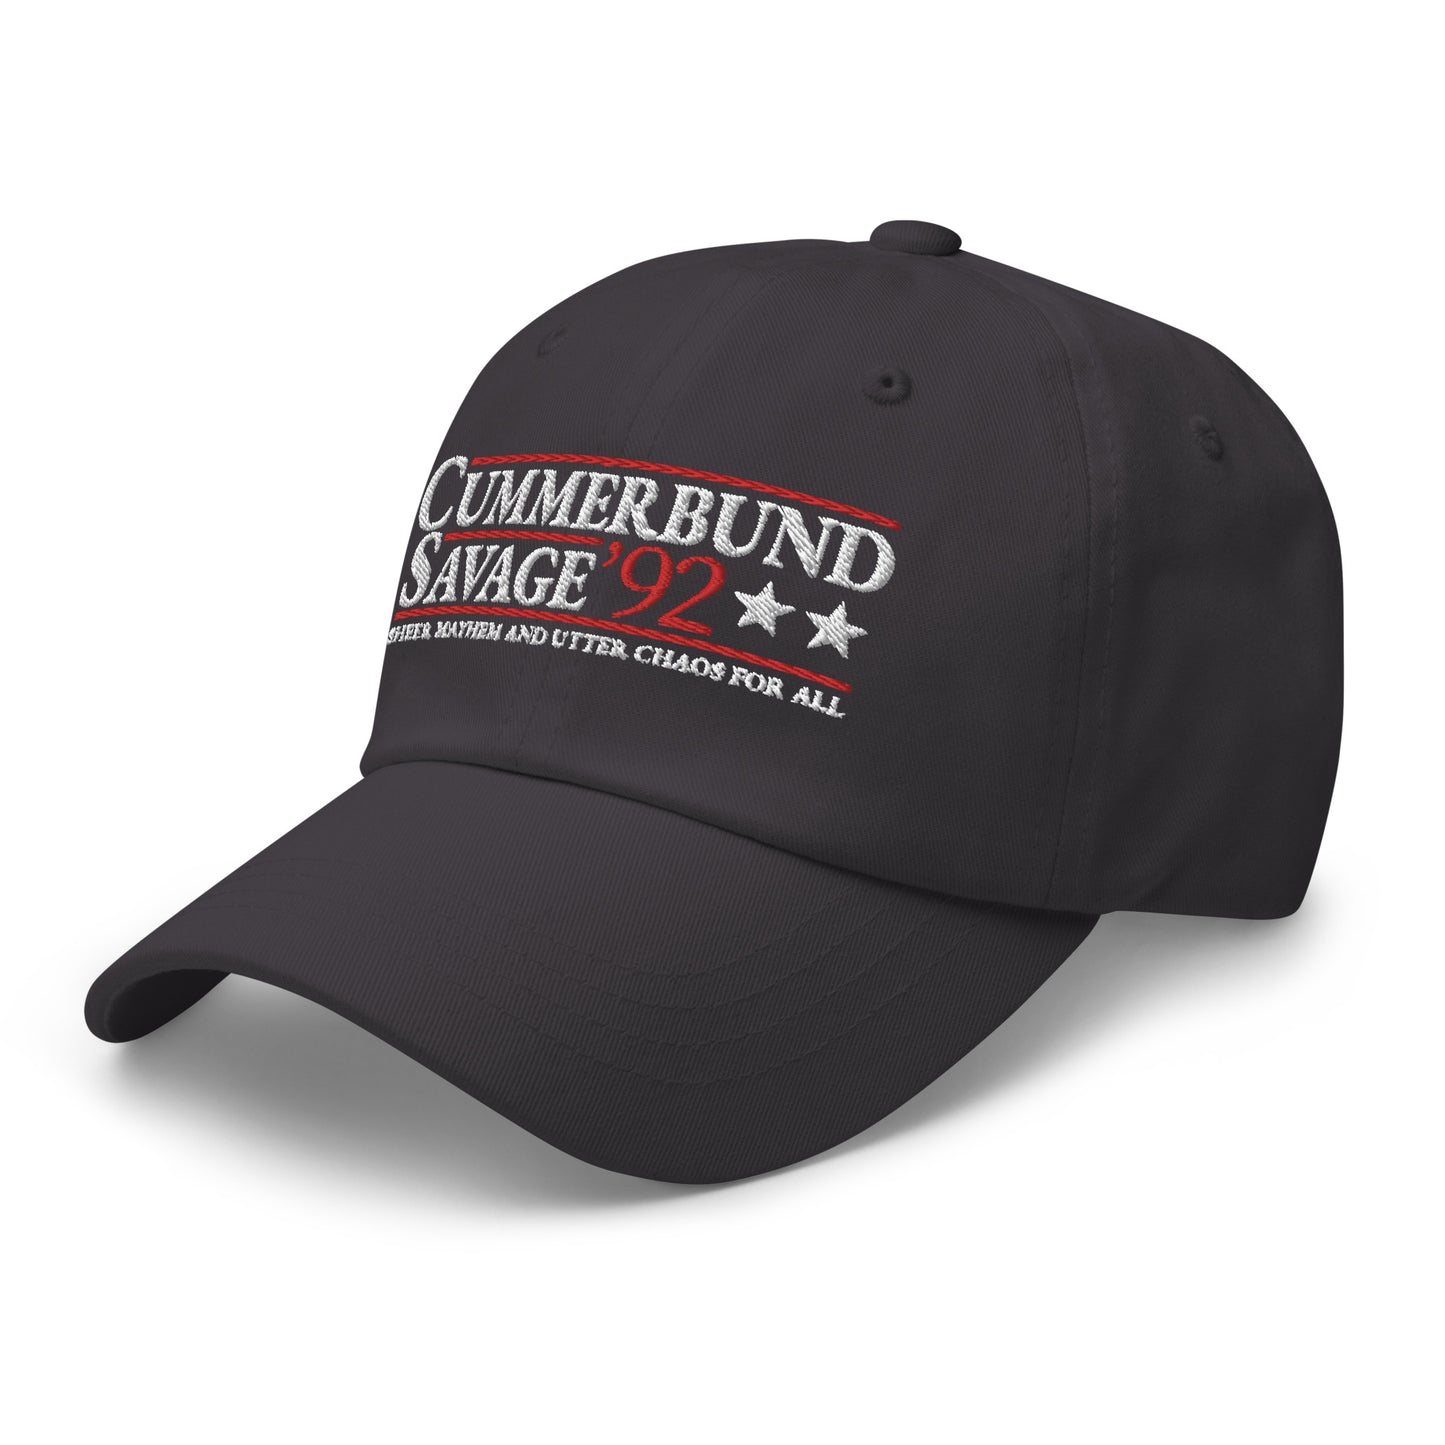 Cummerbund For President Dark and Colorful Hat